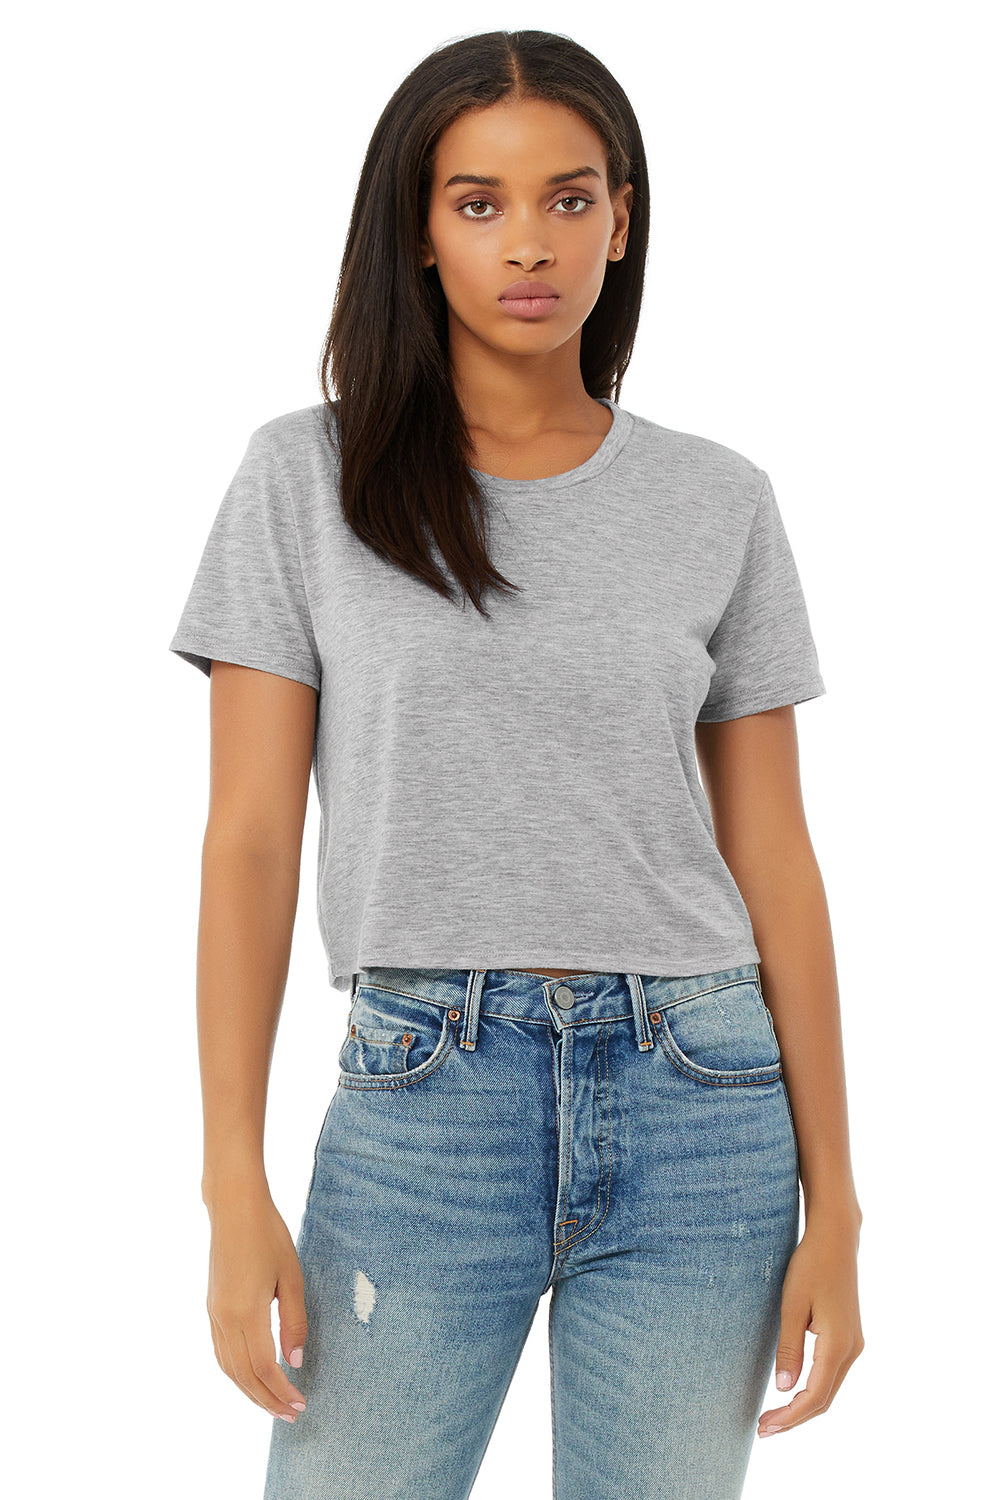 Bella + Canvas B8882/8882 Womens Flowy Cropped Short Sleeve Crewneck T-Shirt Heather Grey Model Front